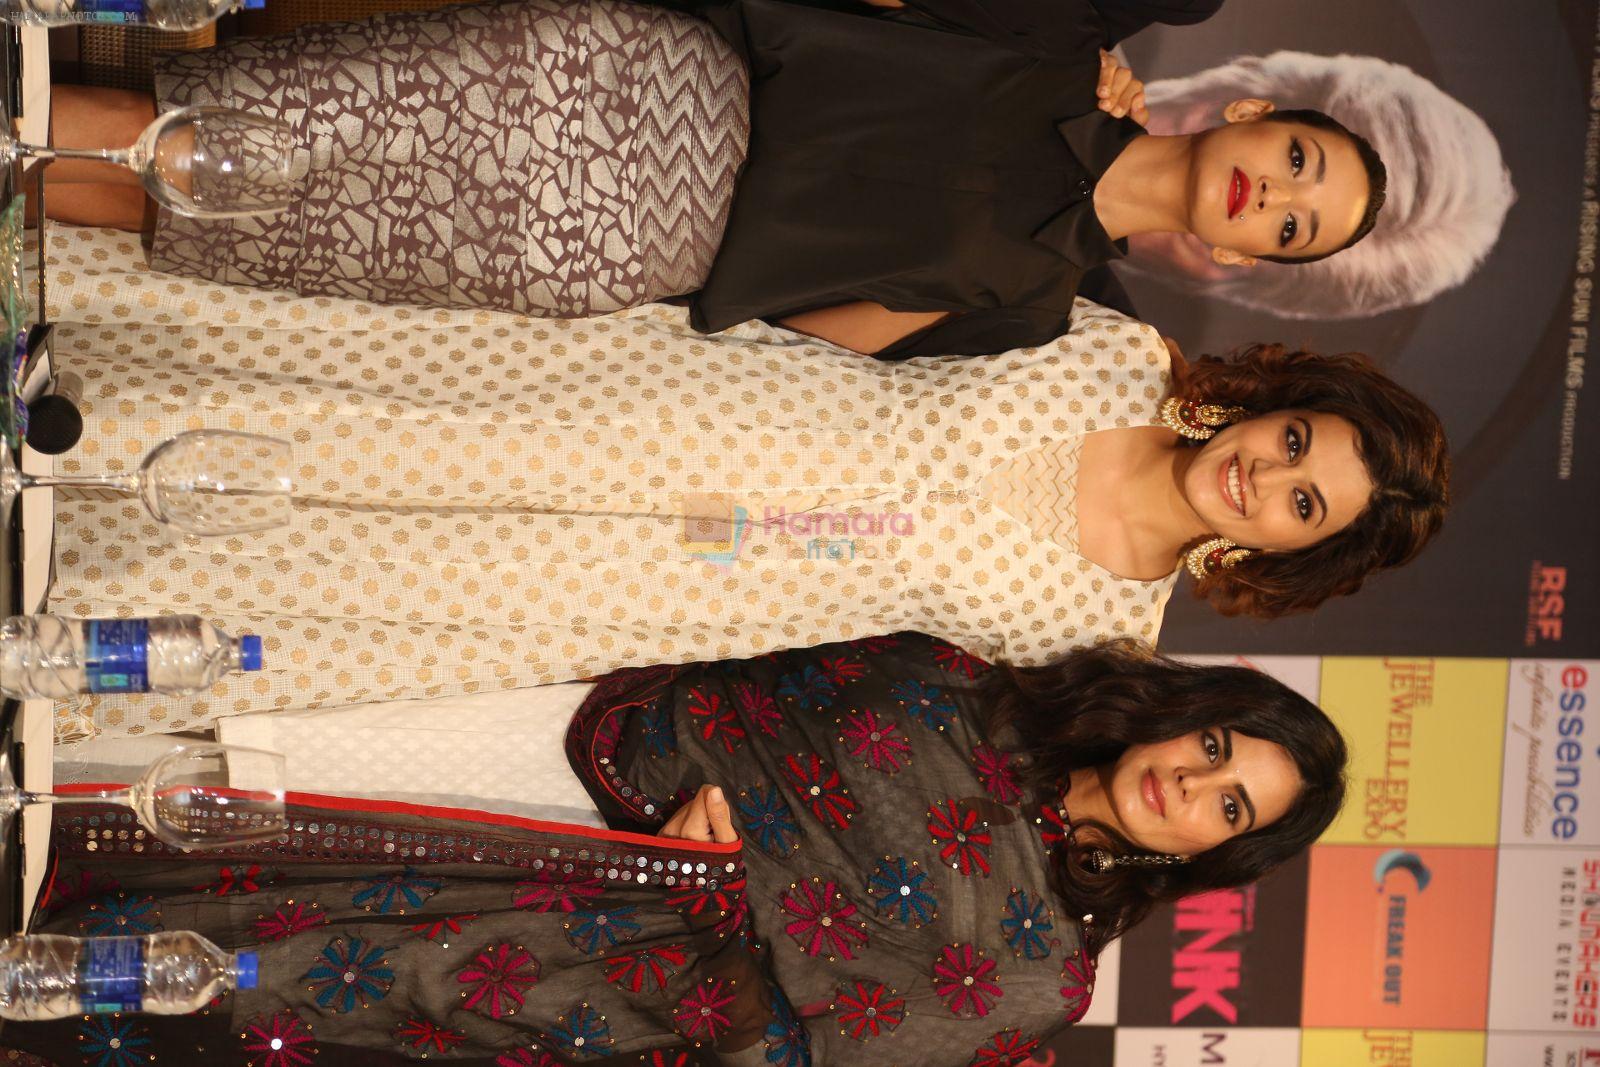 Taapsee Pannu , Kirti Kulhari, Andrea Tariang at Pink press meet in Mumbai on 9th Sept 2016